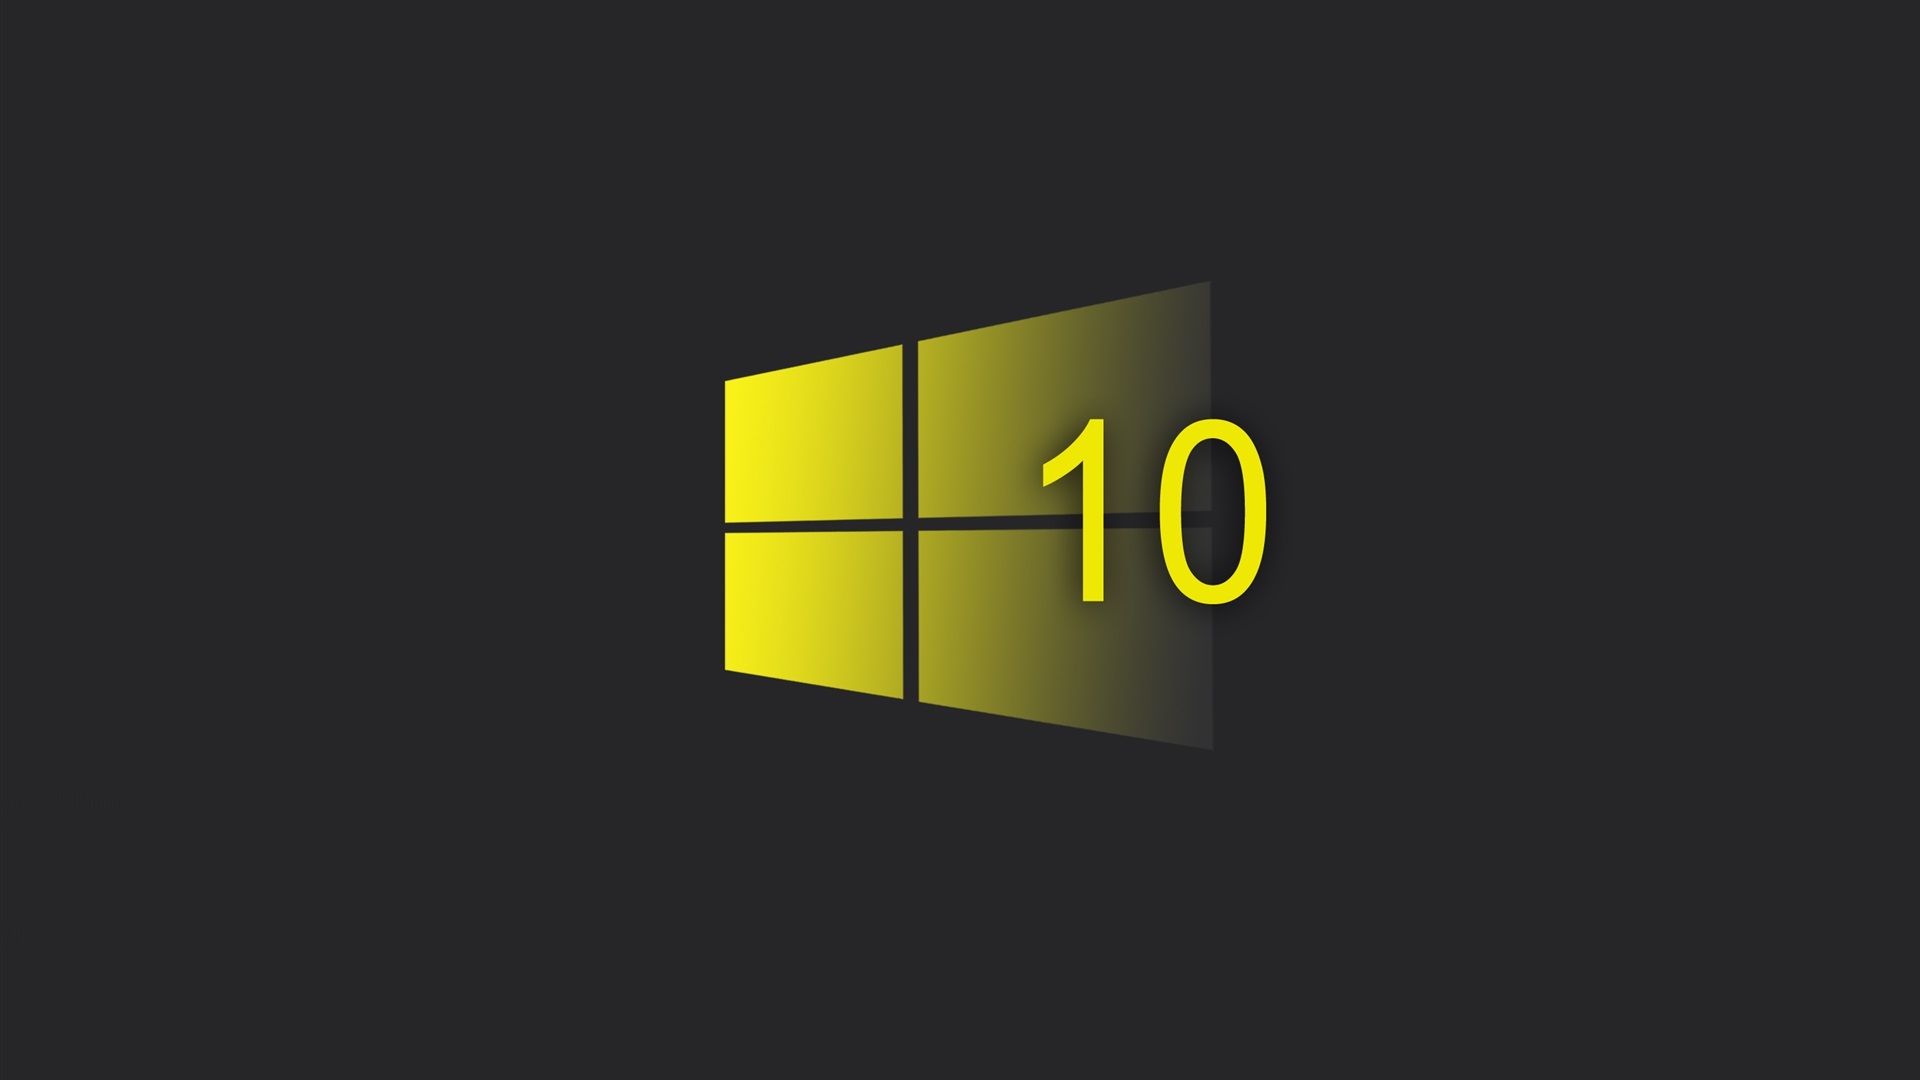 Windows-10-system-yellow-style-1920x1080.jpg